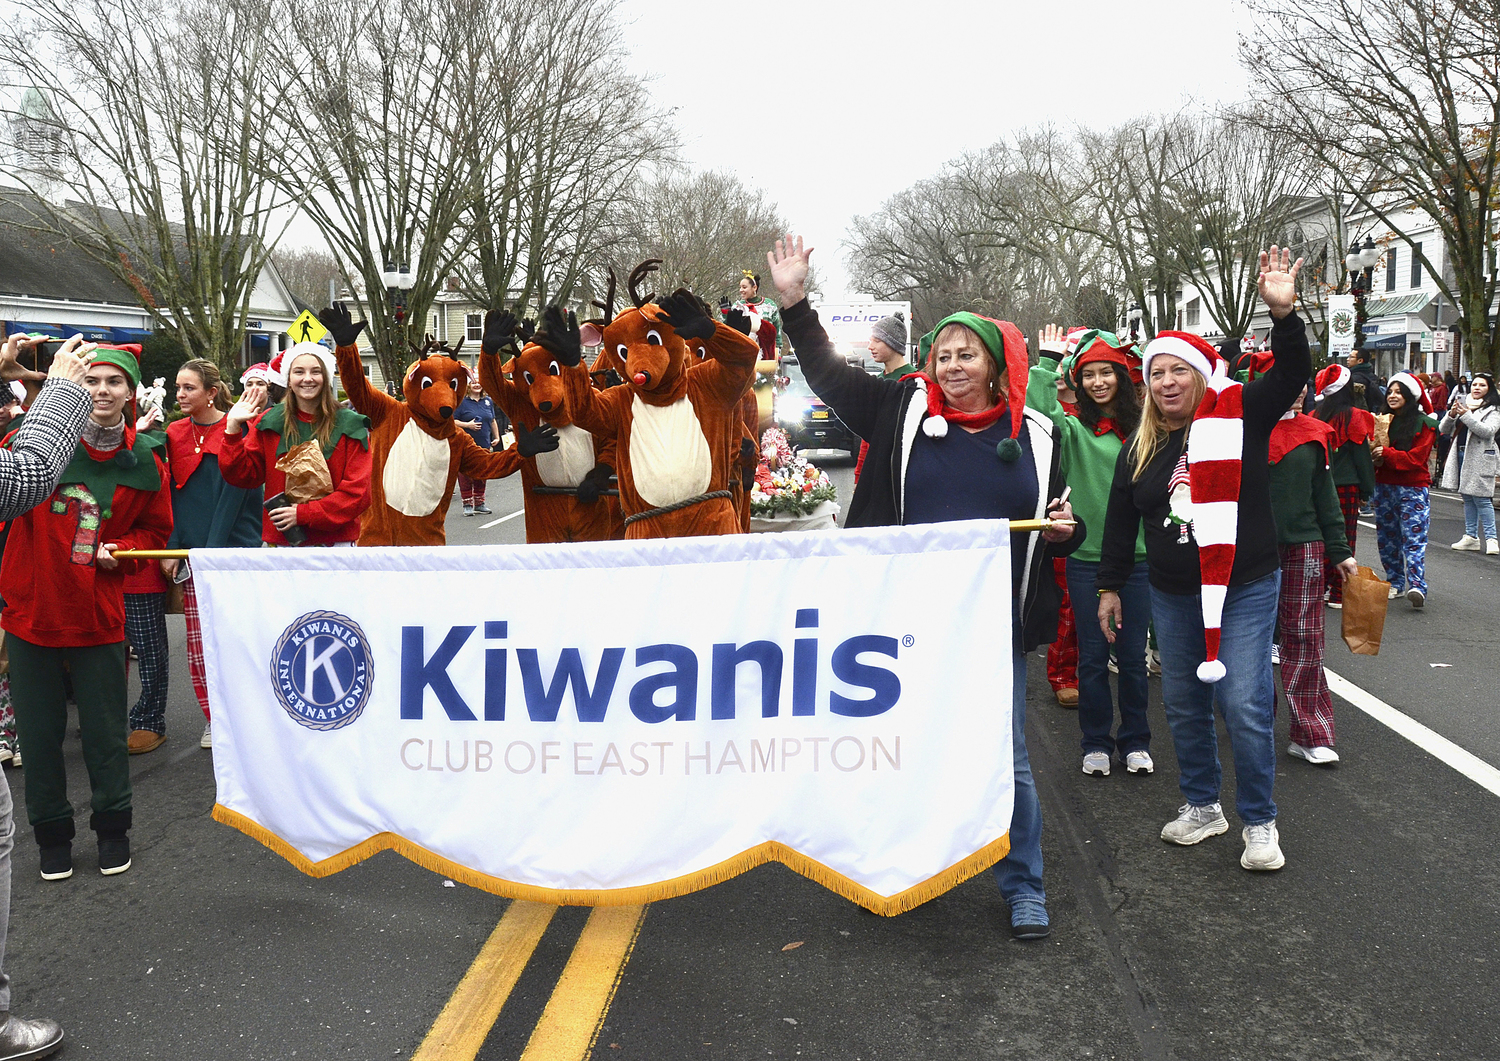 The East Hampton Kiwanis Club in the Santa Parade on Saturday.